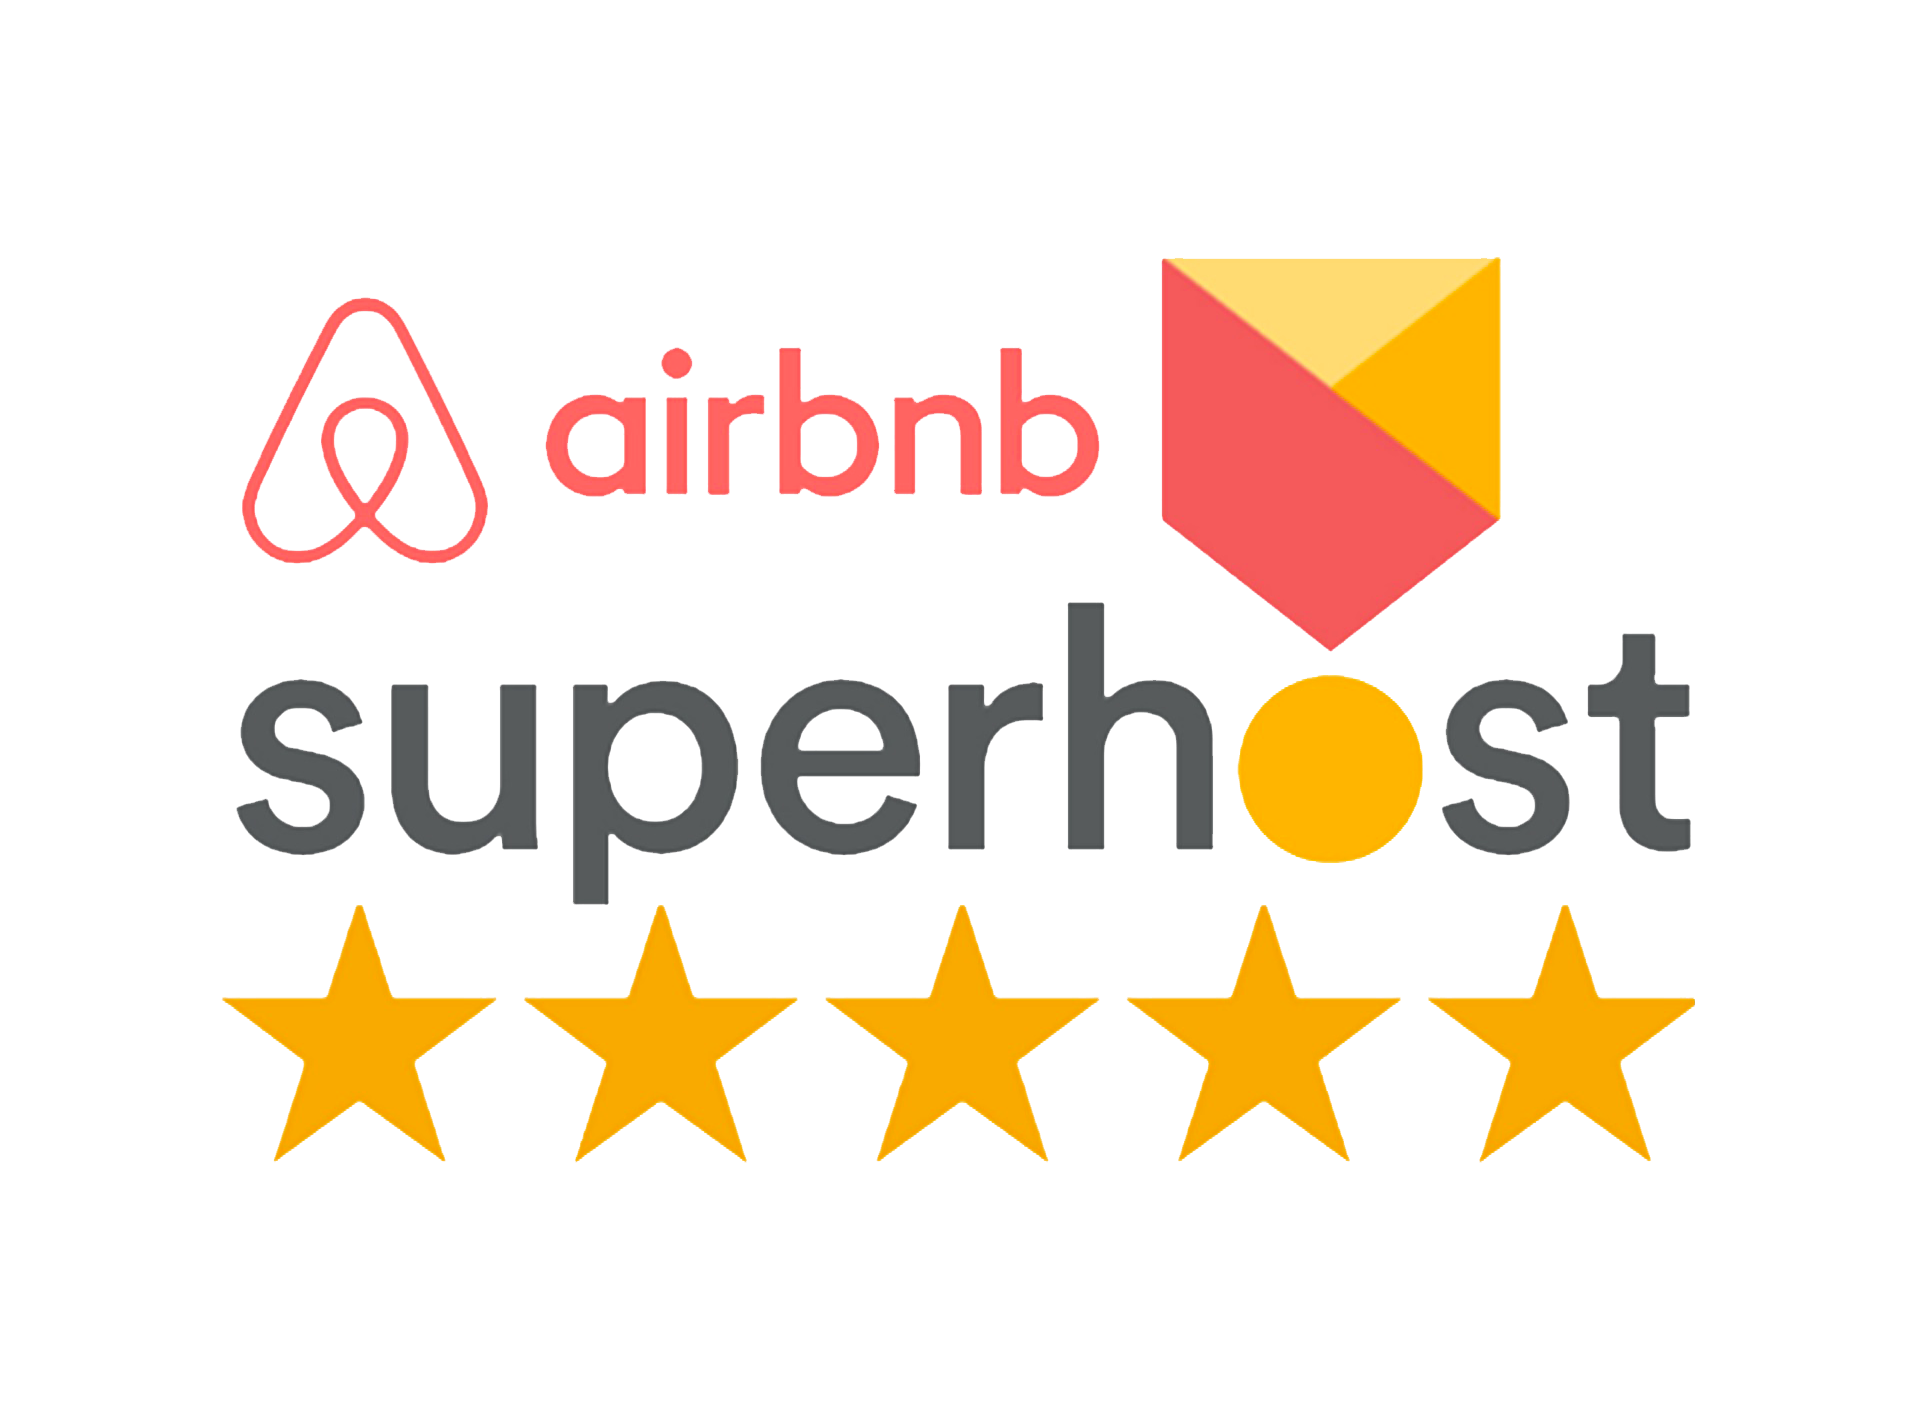 airbnb superhost logo